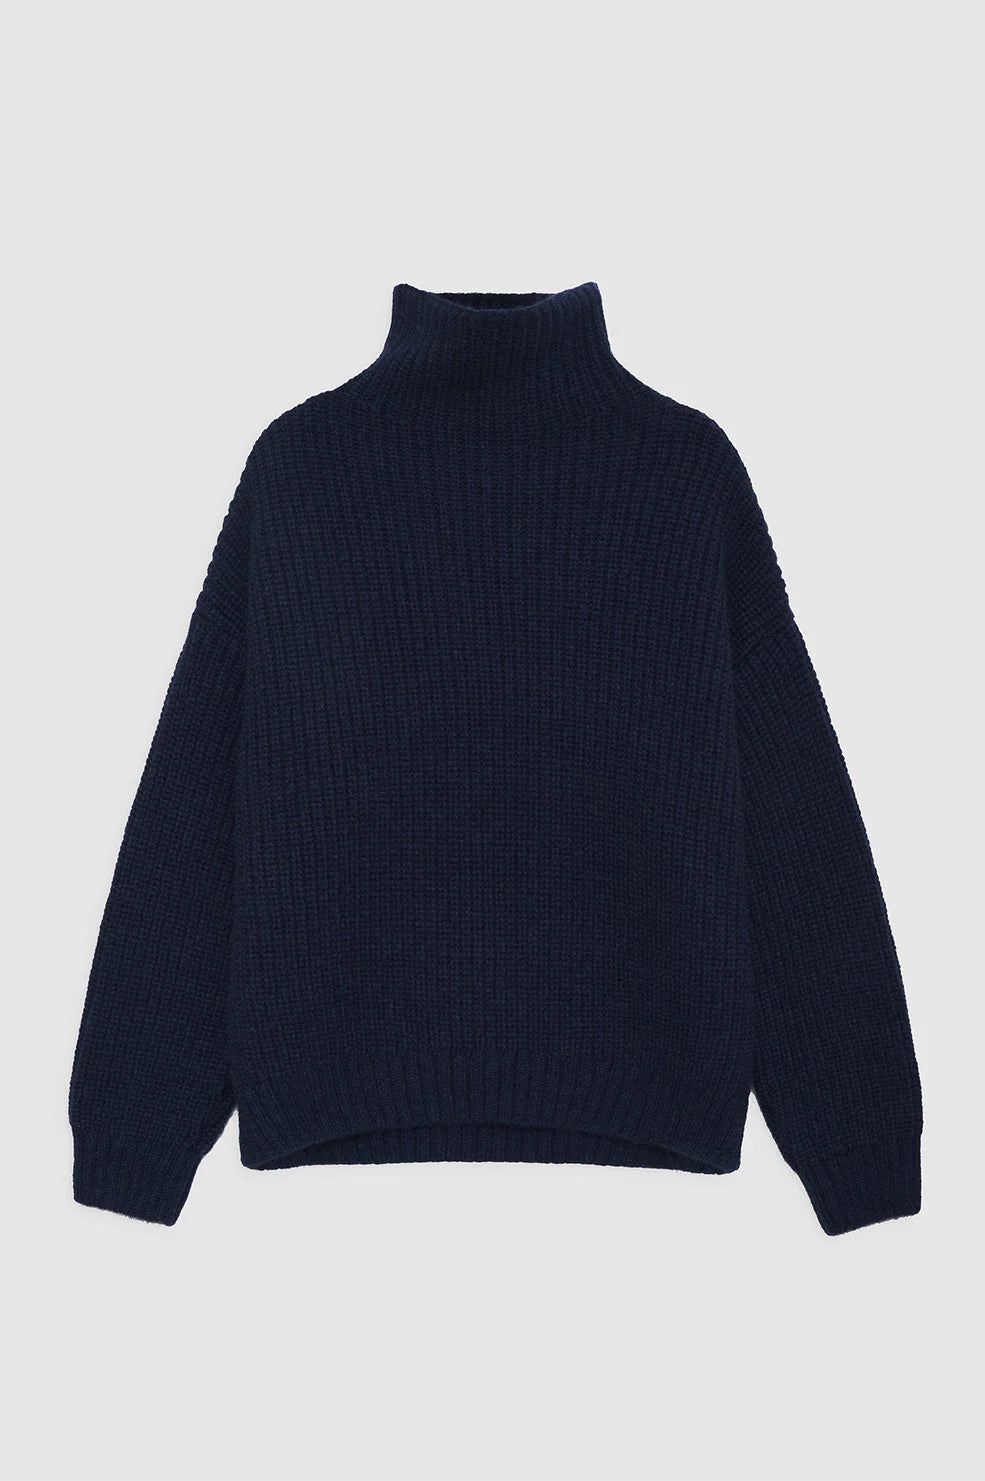 Anine Bing Sydney Sweater - Midnight Navy